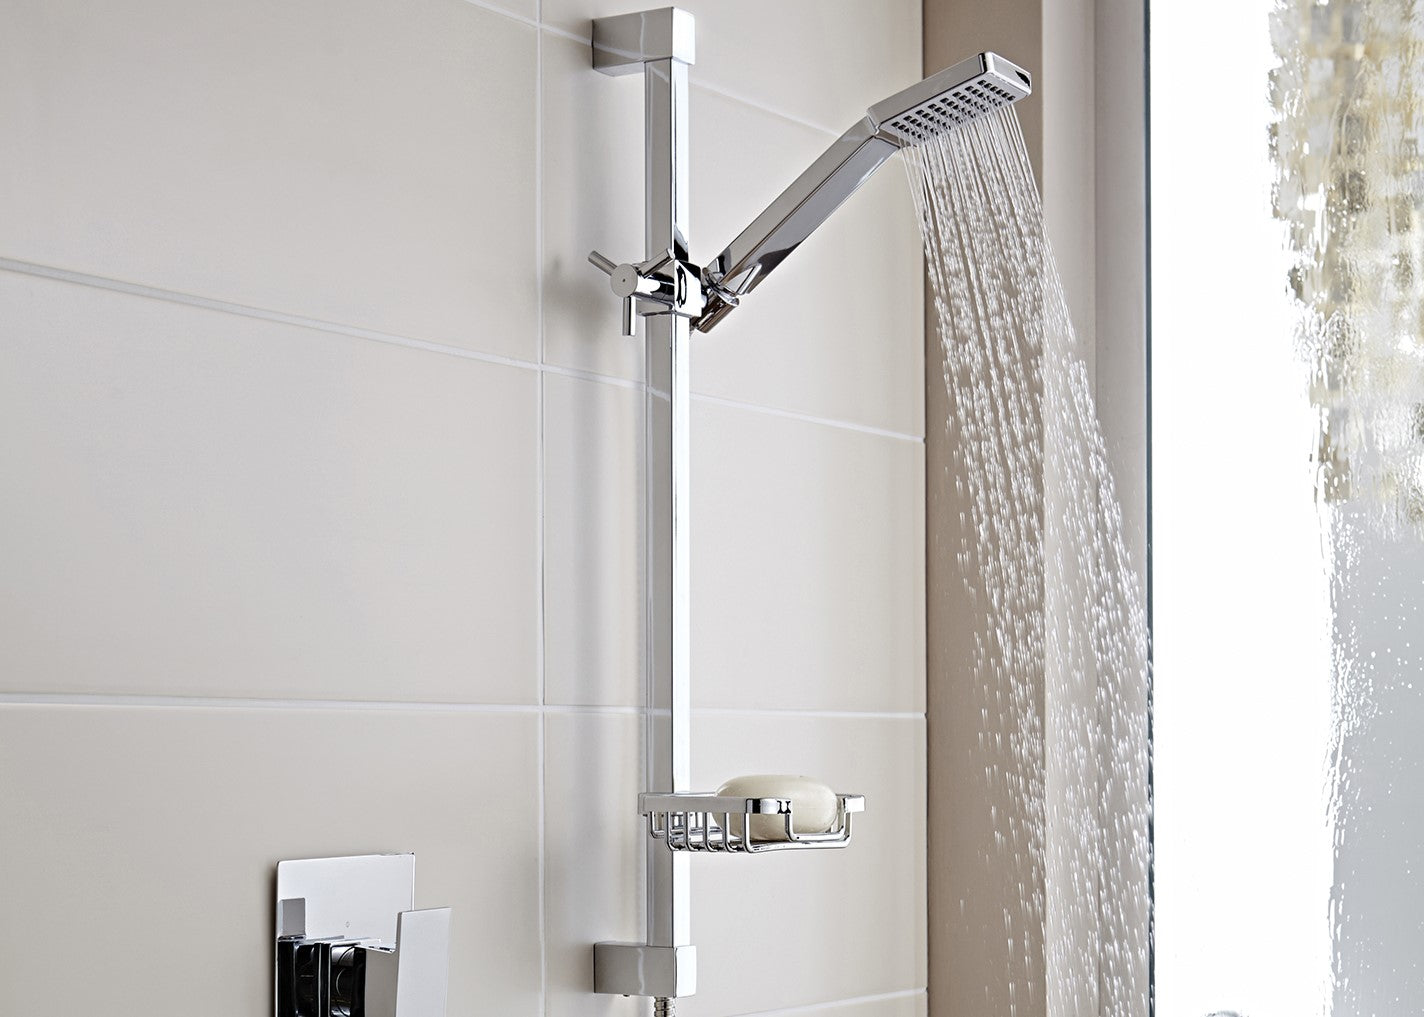 Plumber installing thermostatic shower valve in bathroom